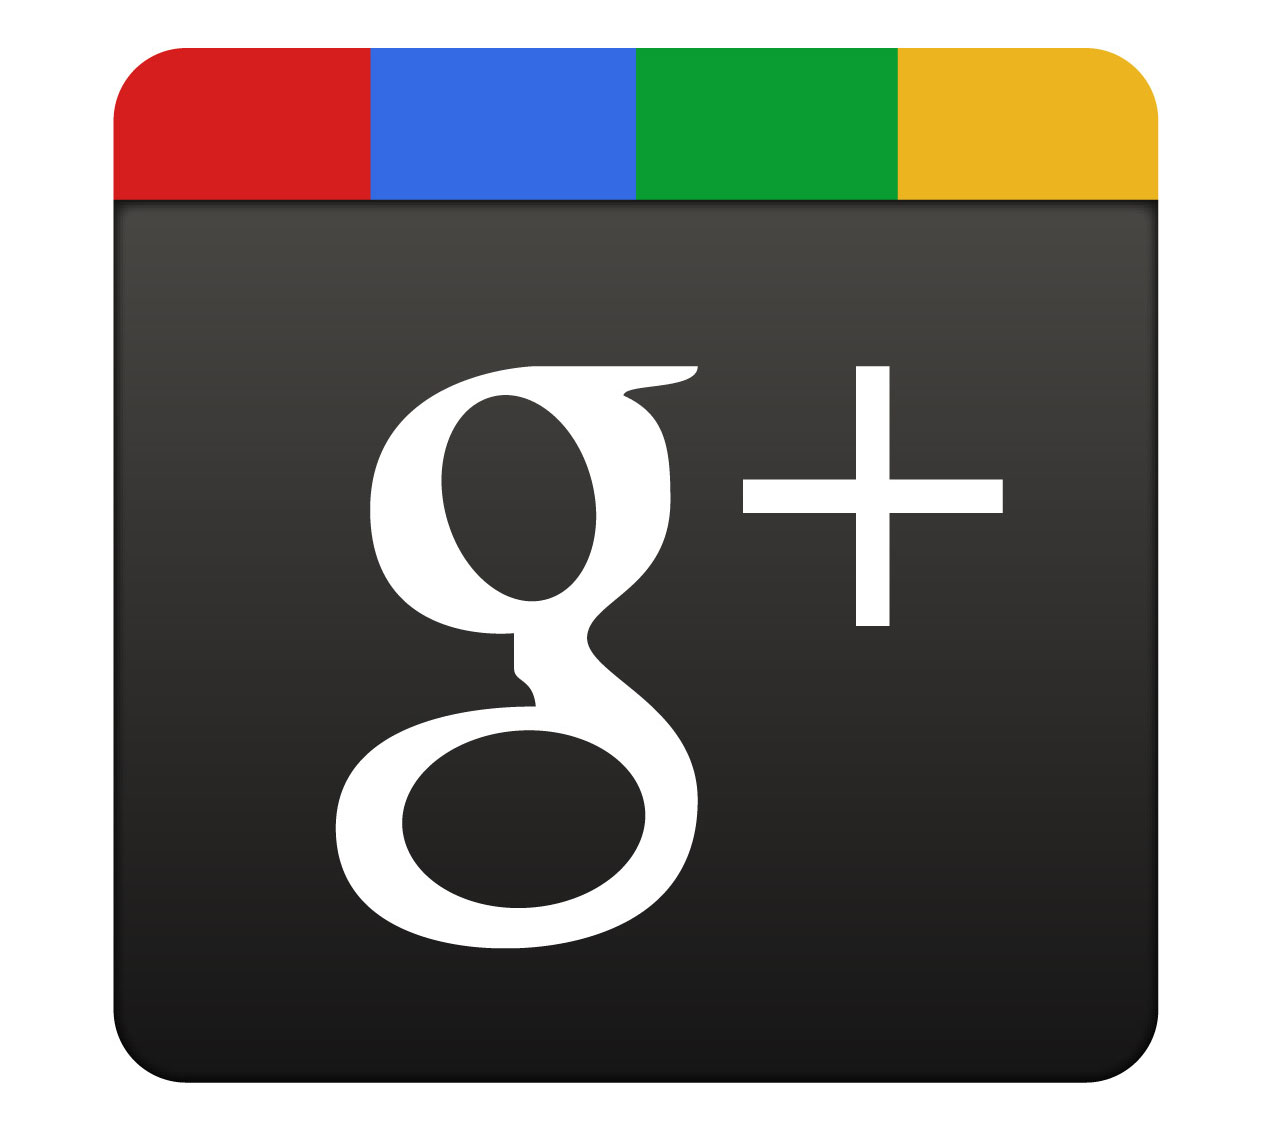 15 New Google Logo Vector Images